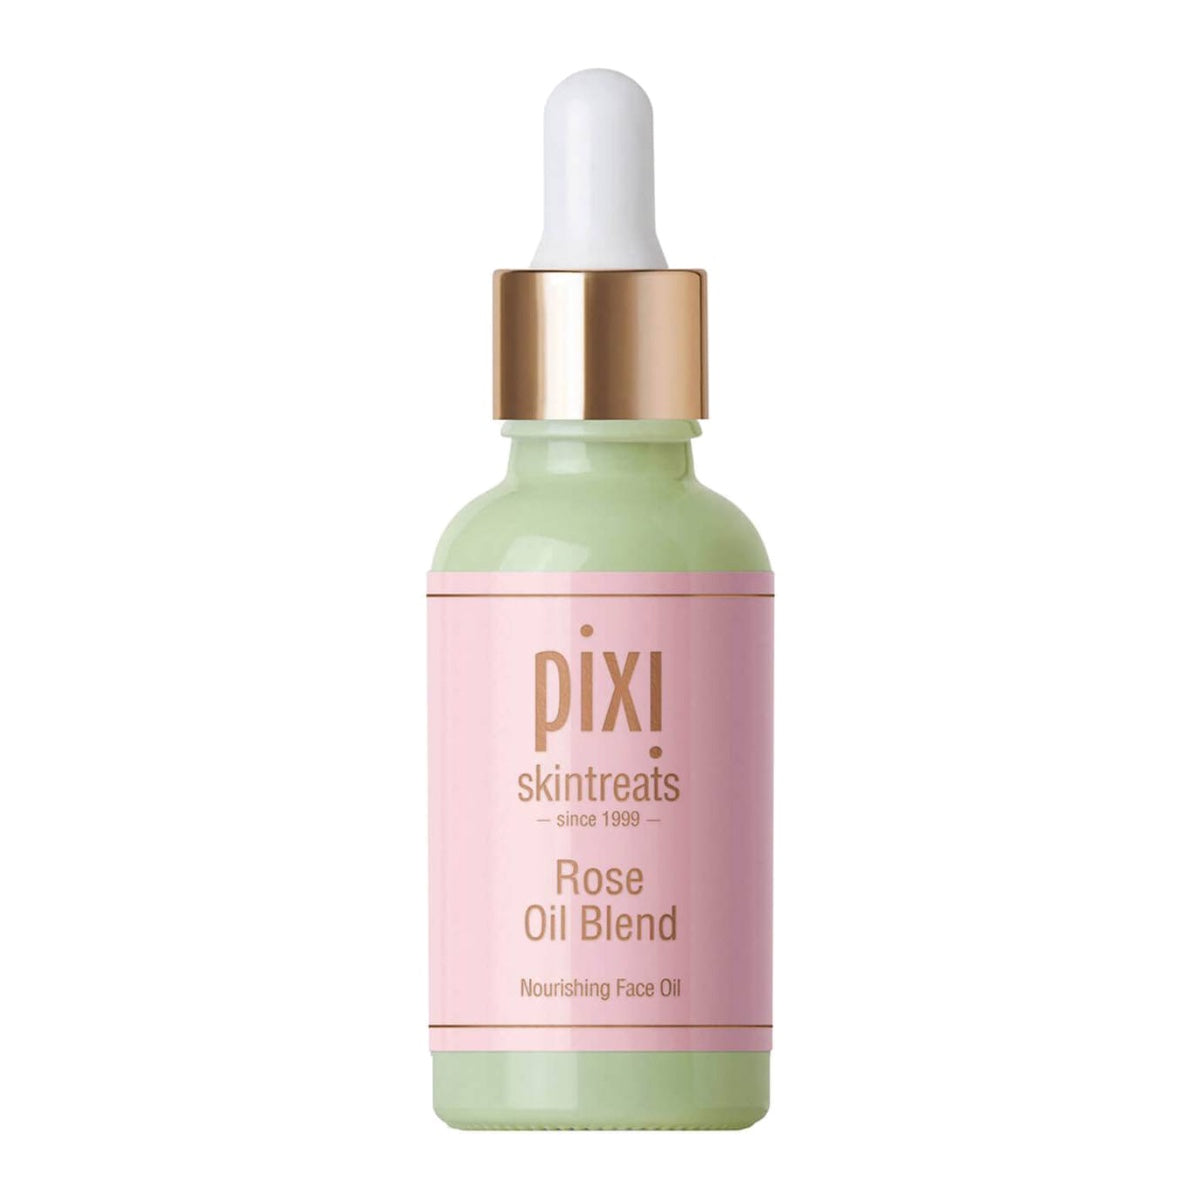 Pixi Rose Oil Blend Serum 30 ml